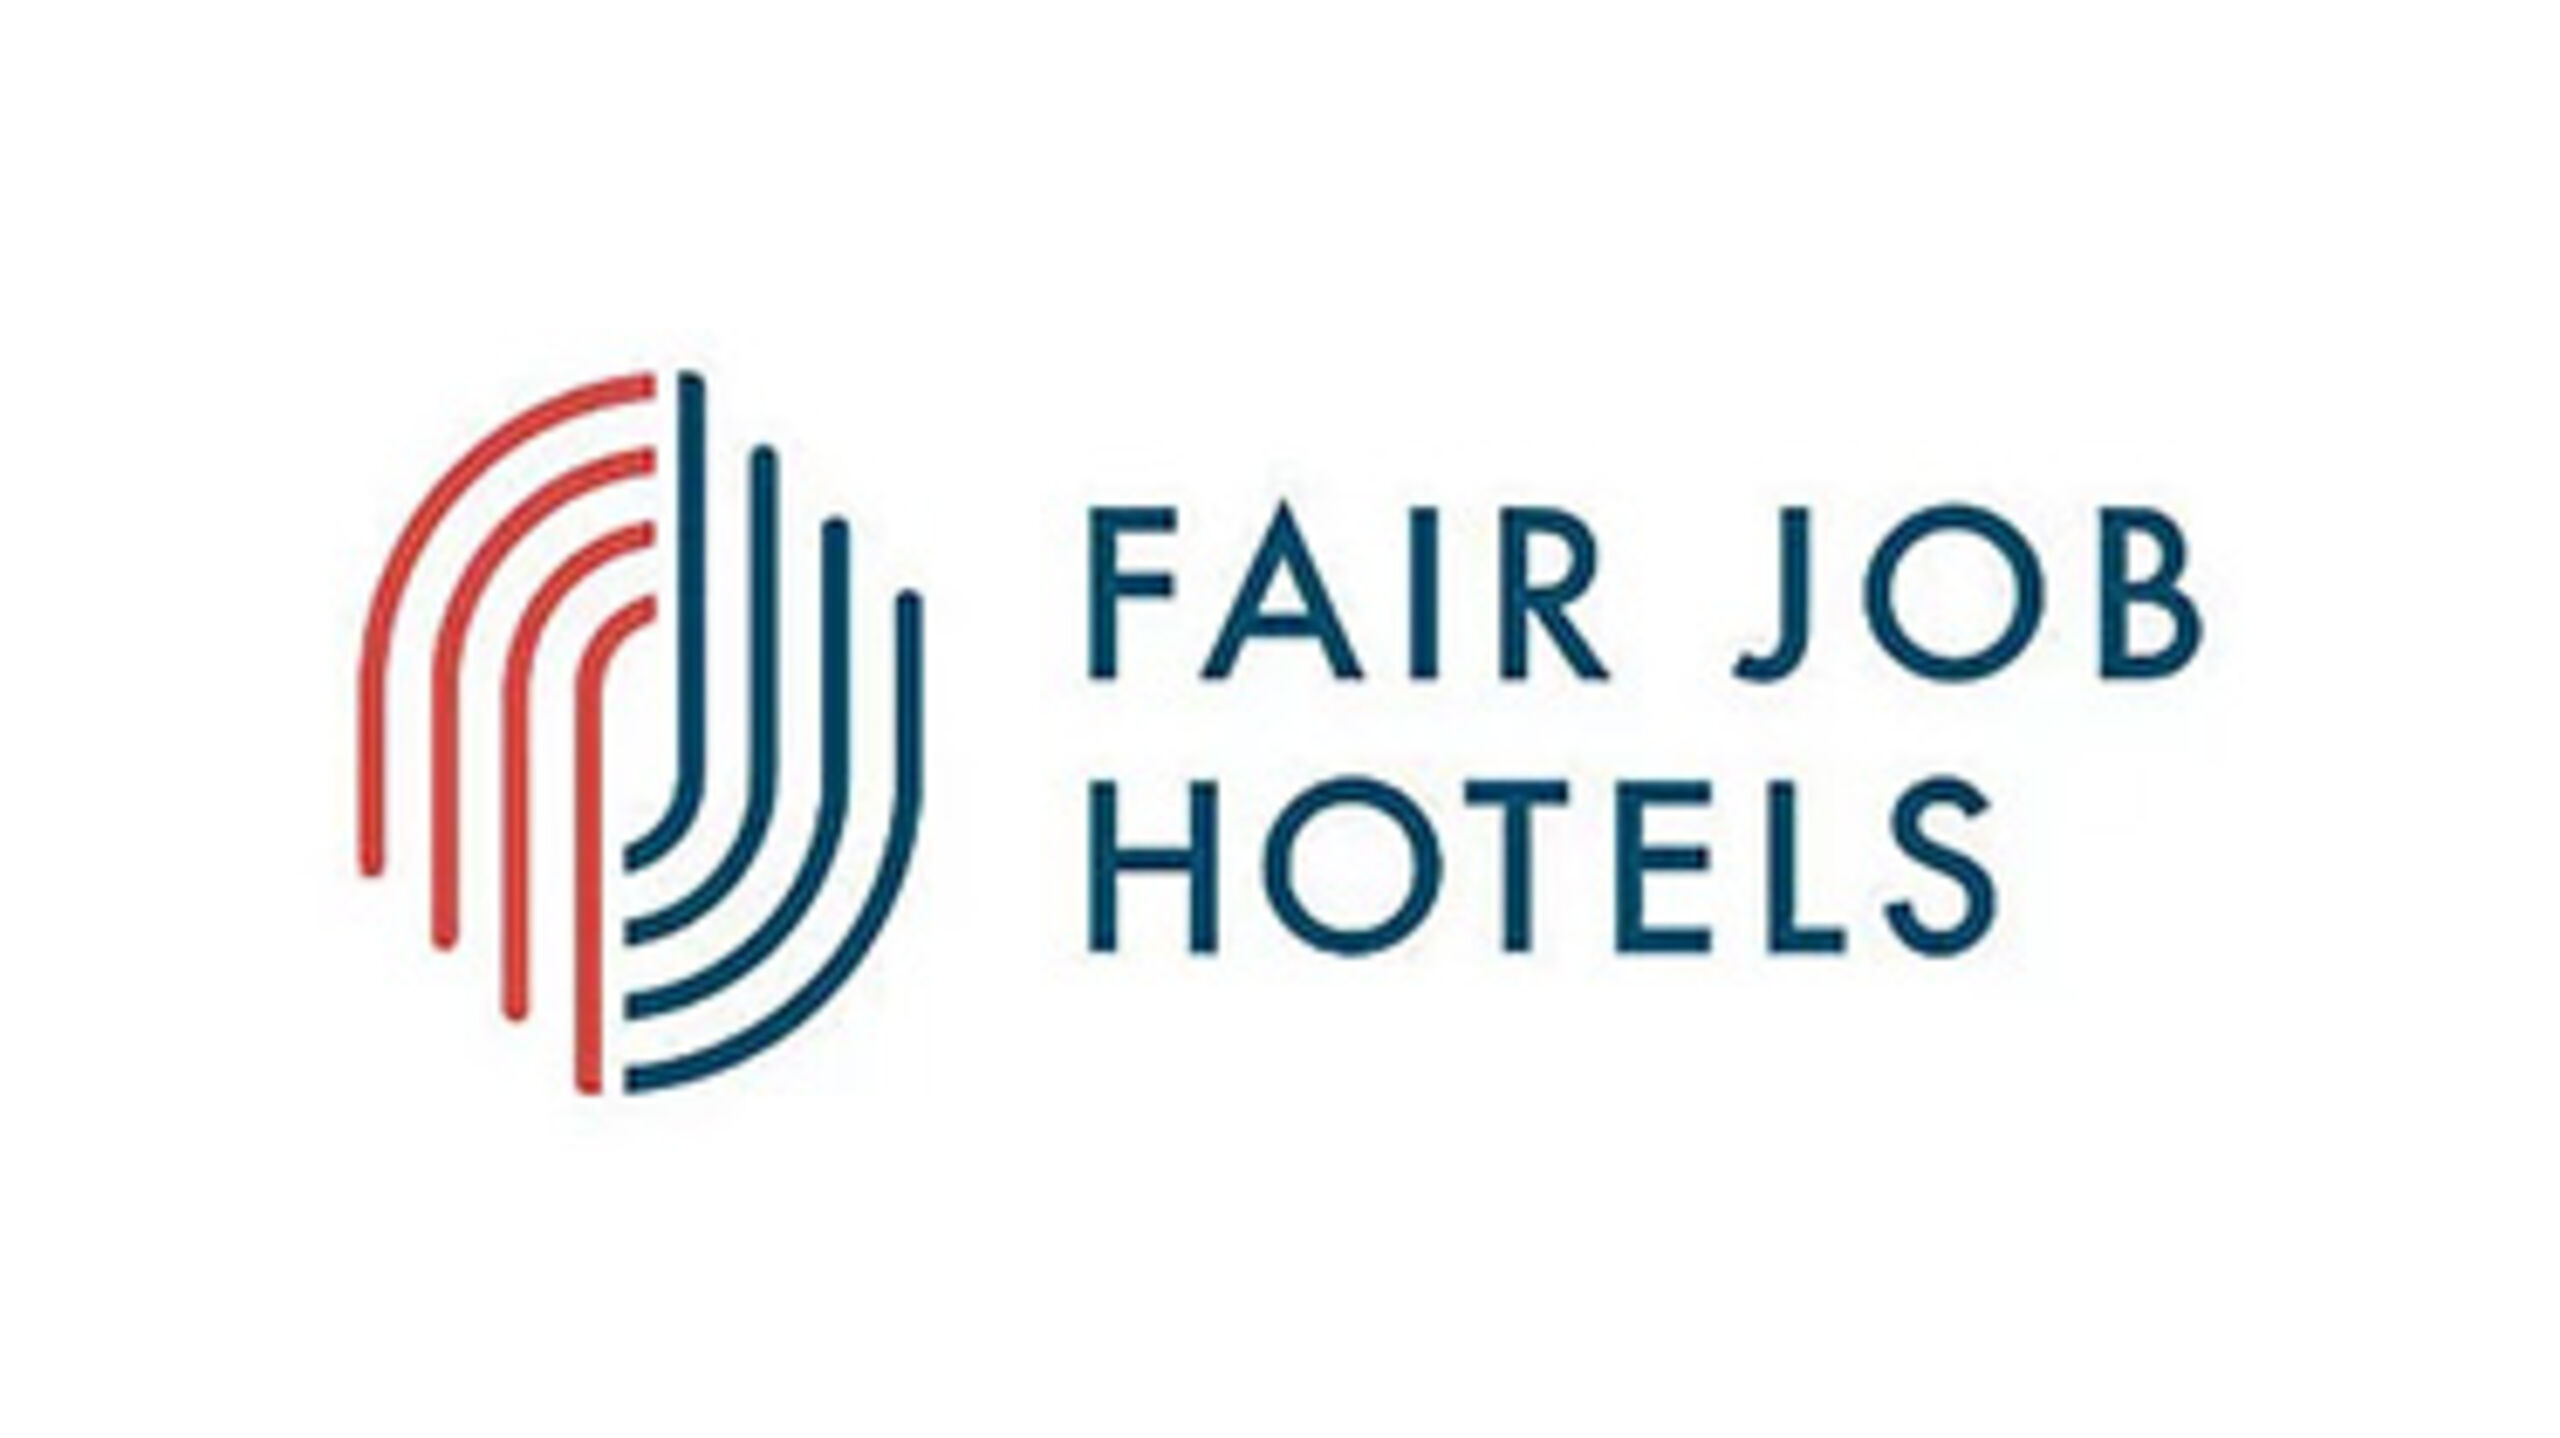 Fair Job Hotels